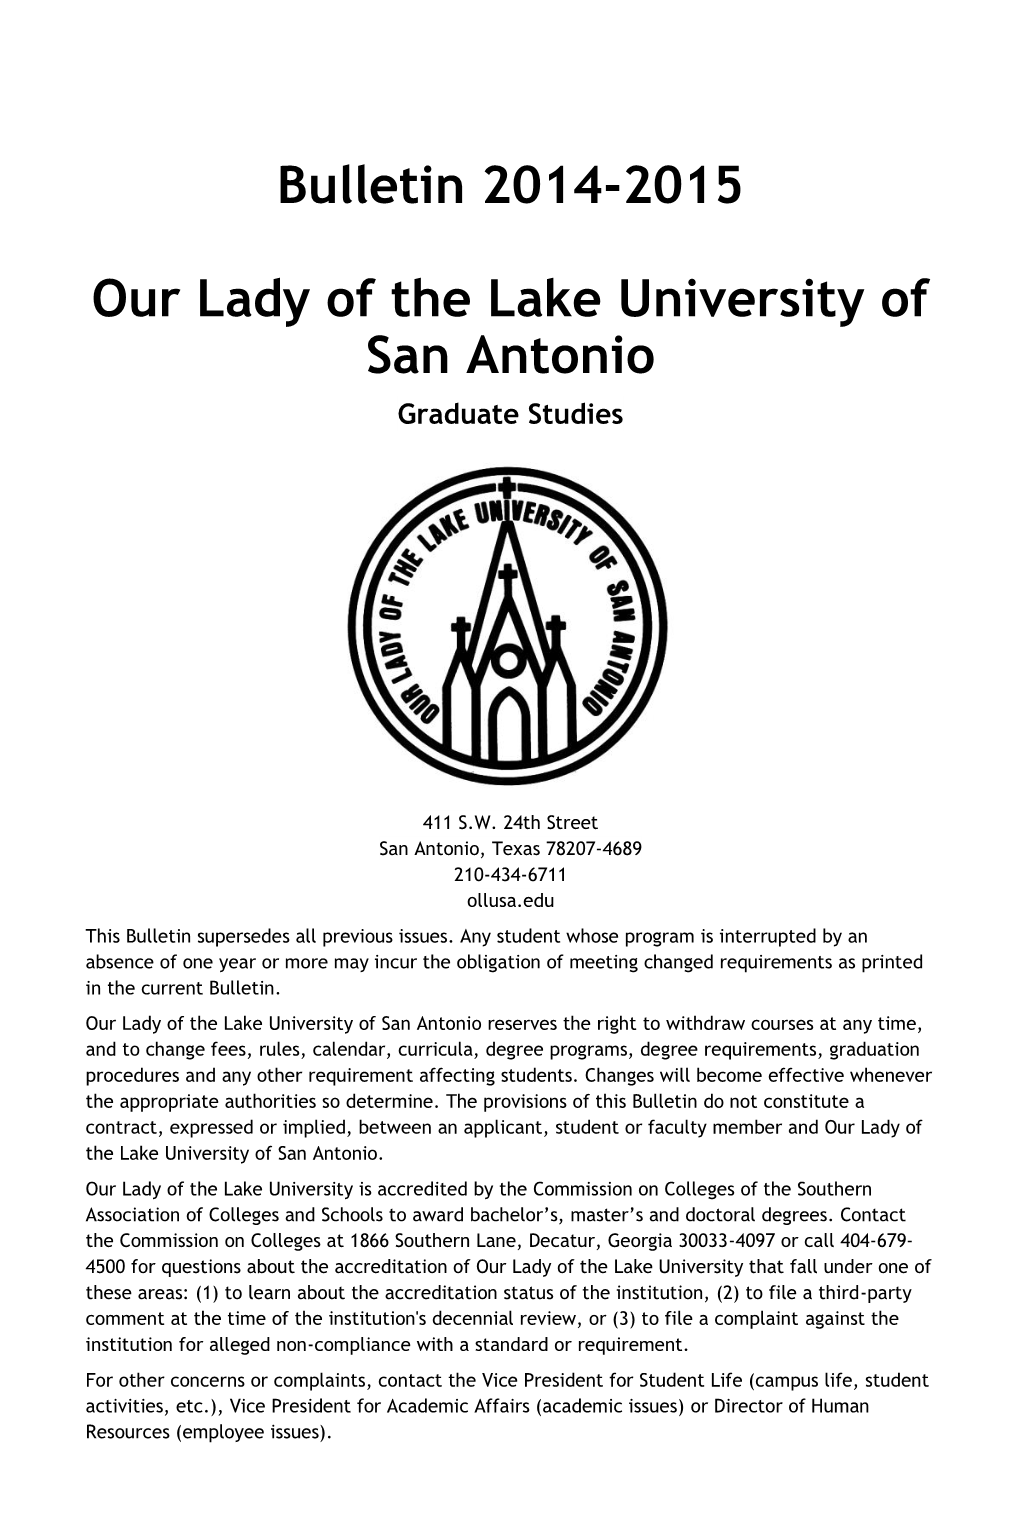 Bulletin 2014-2015 Our Lady of the Lake University of San Antonio